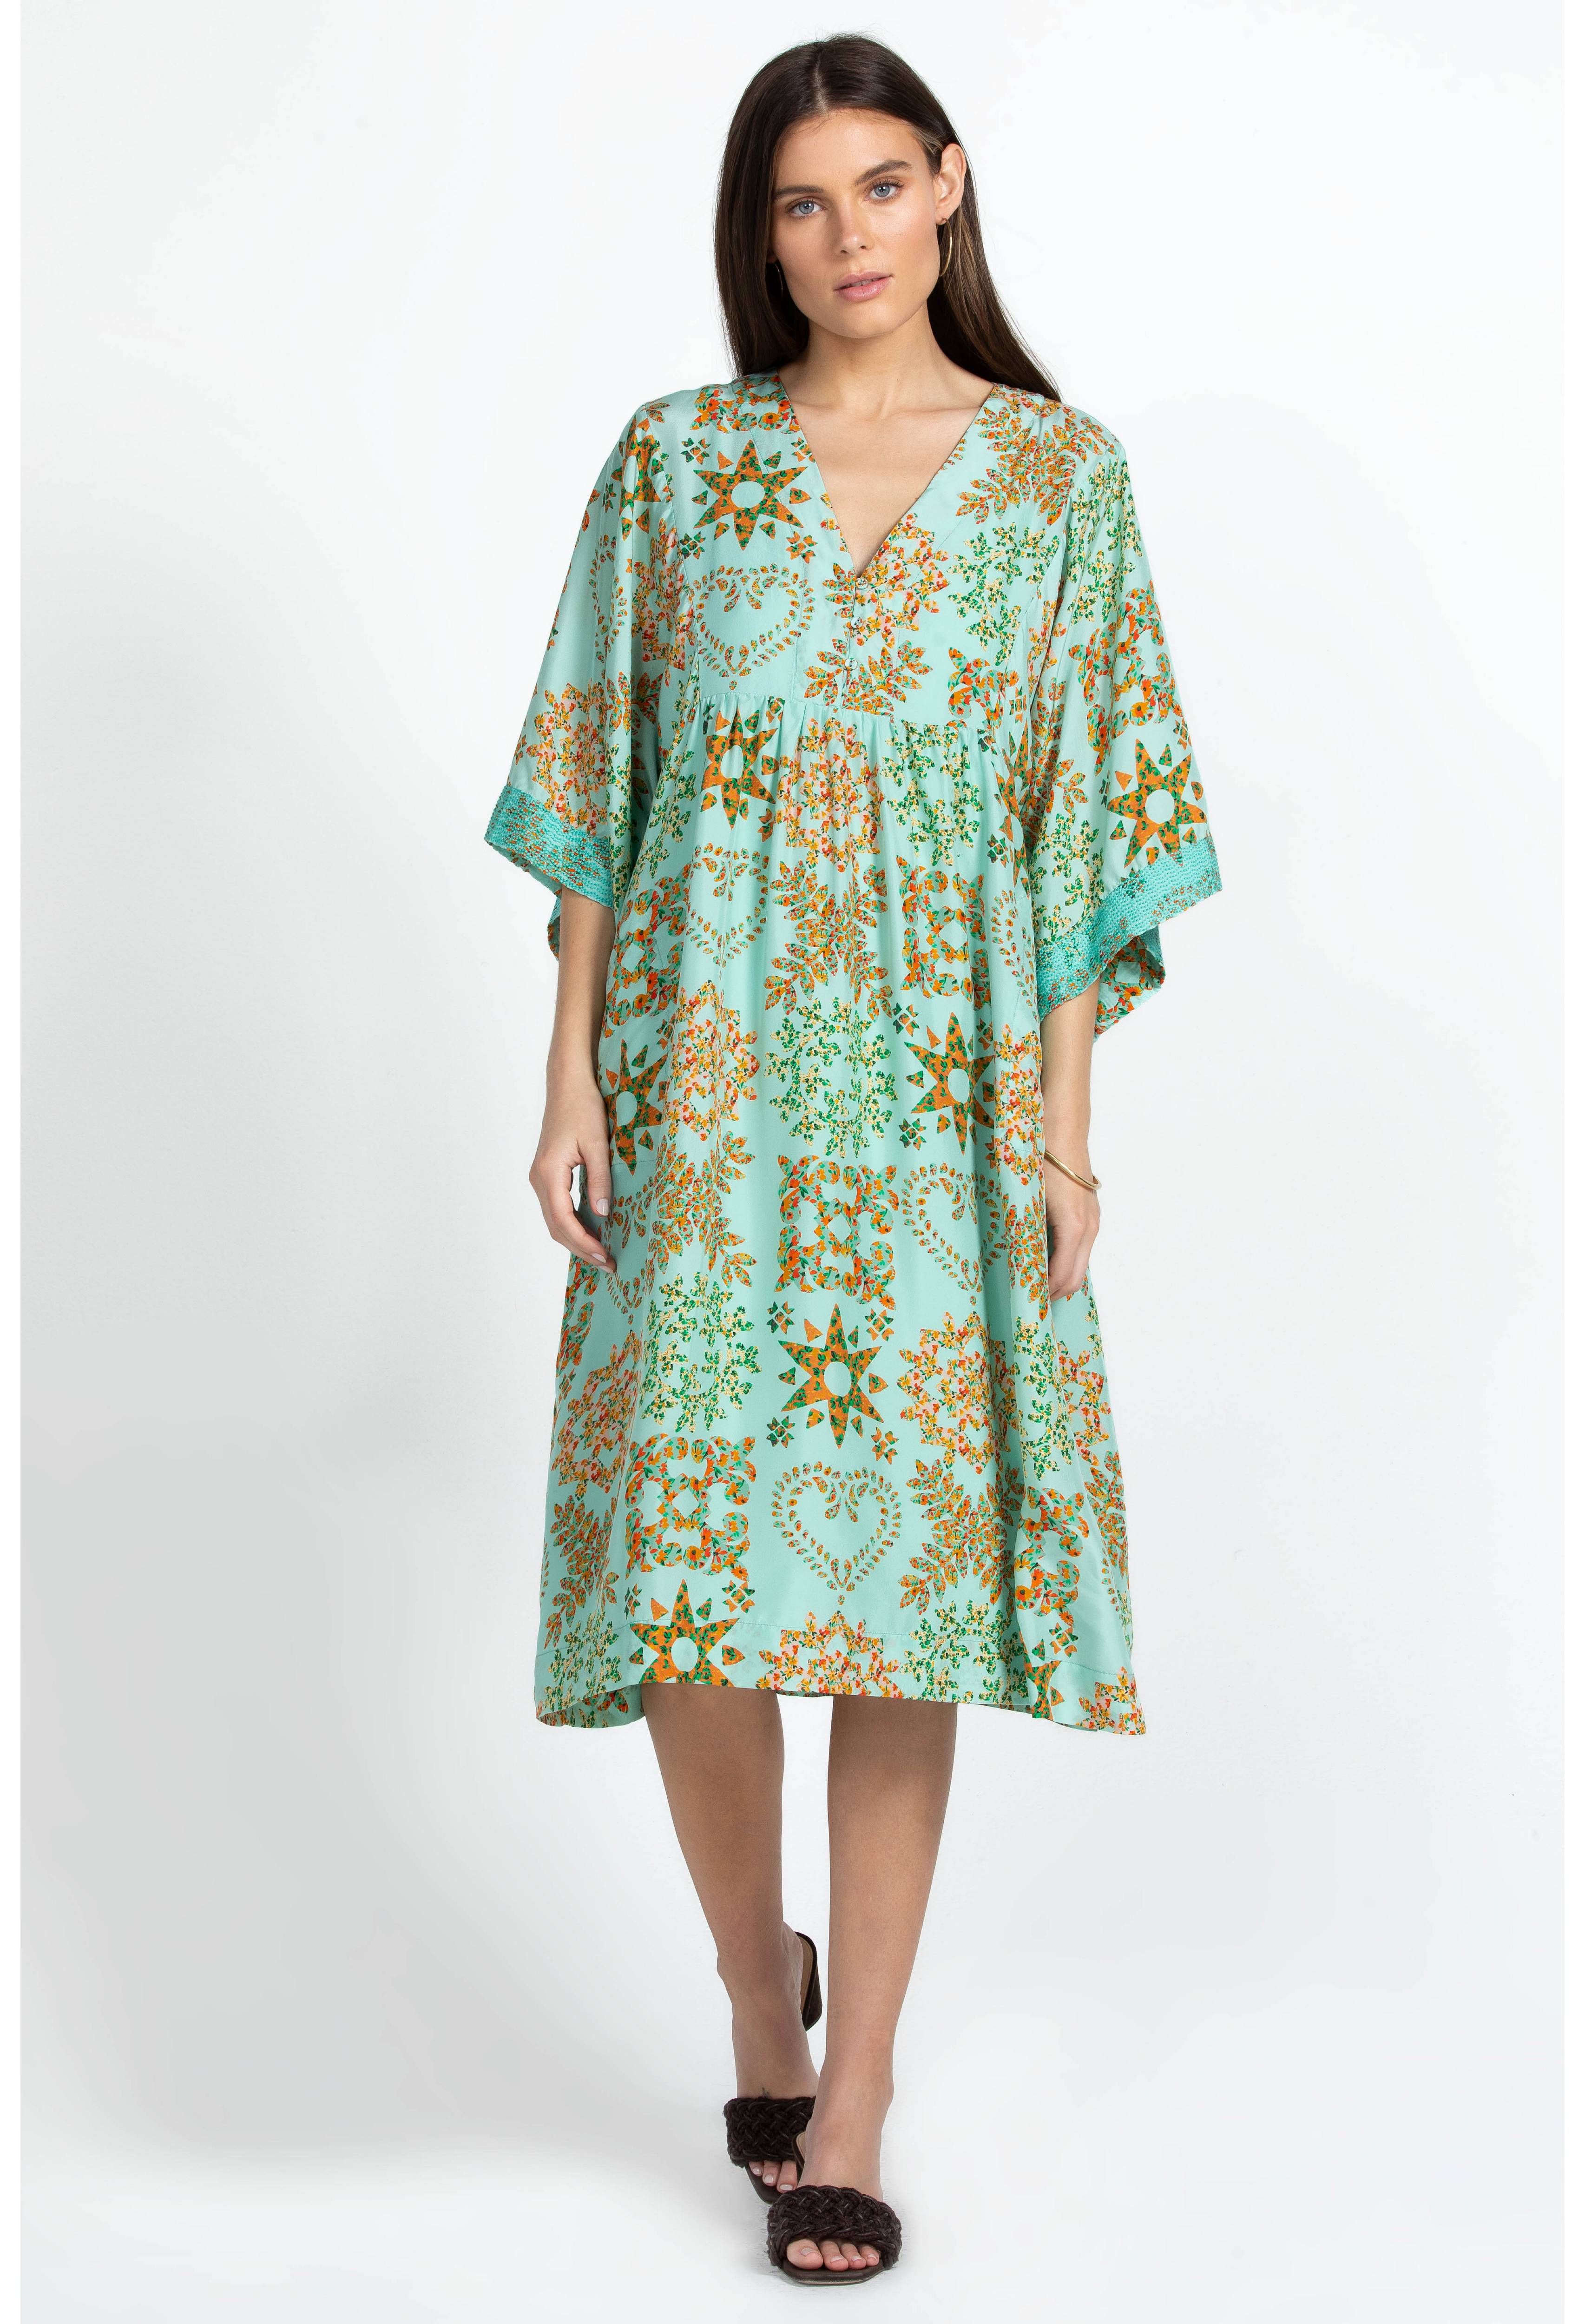 Corbetta Kimono Dress, , large image number 2